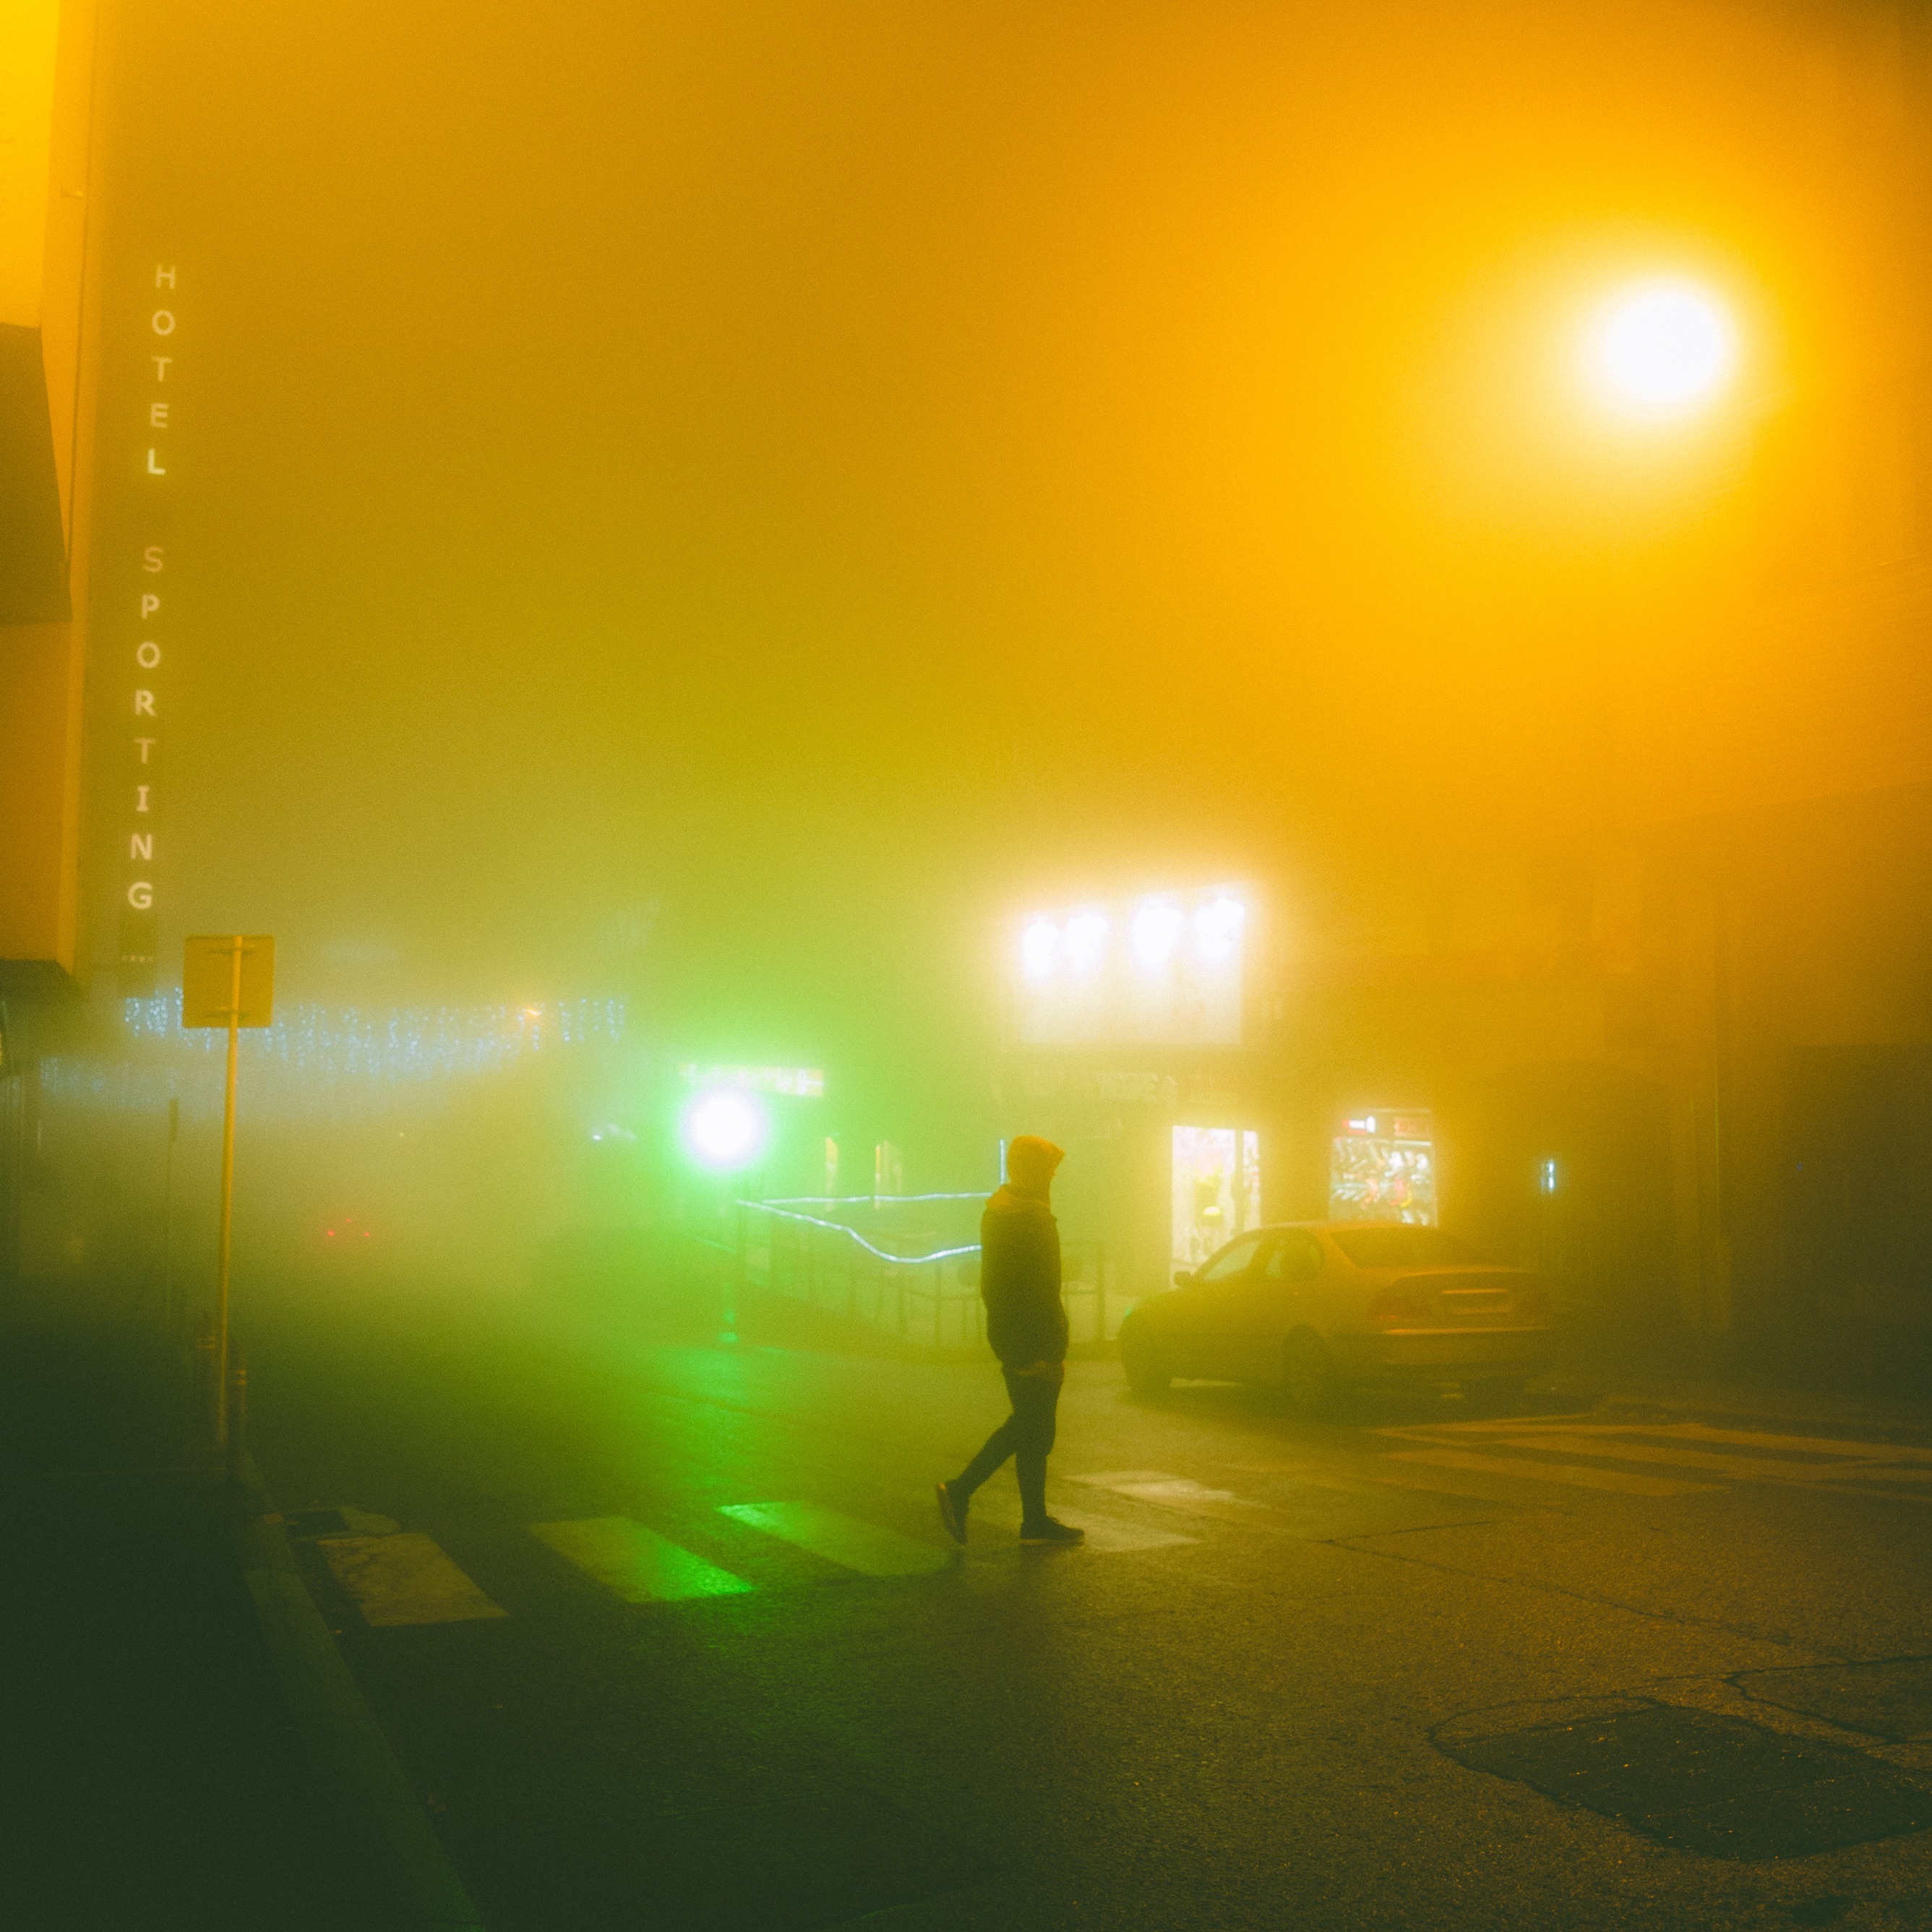 photo of pedestrian at crosswalk in fog